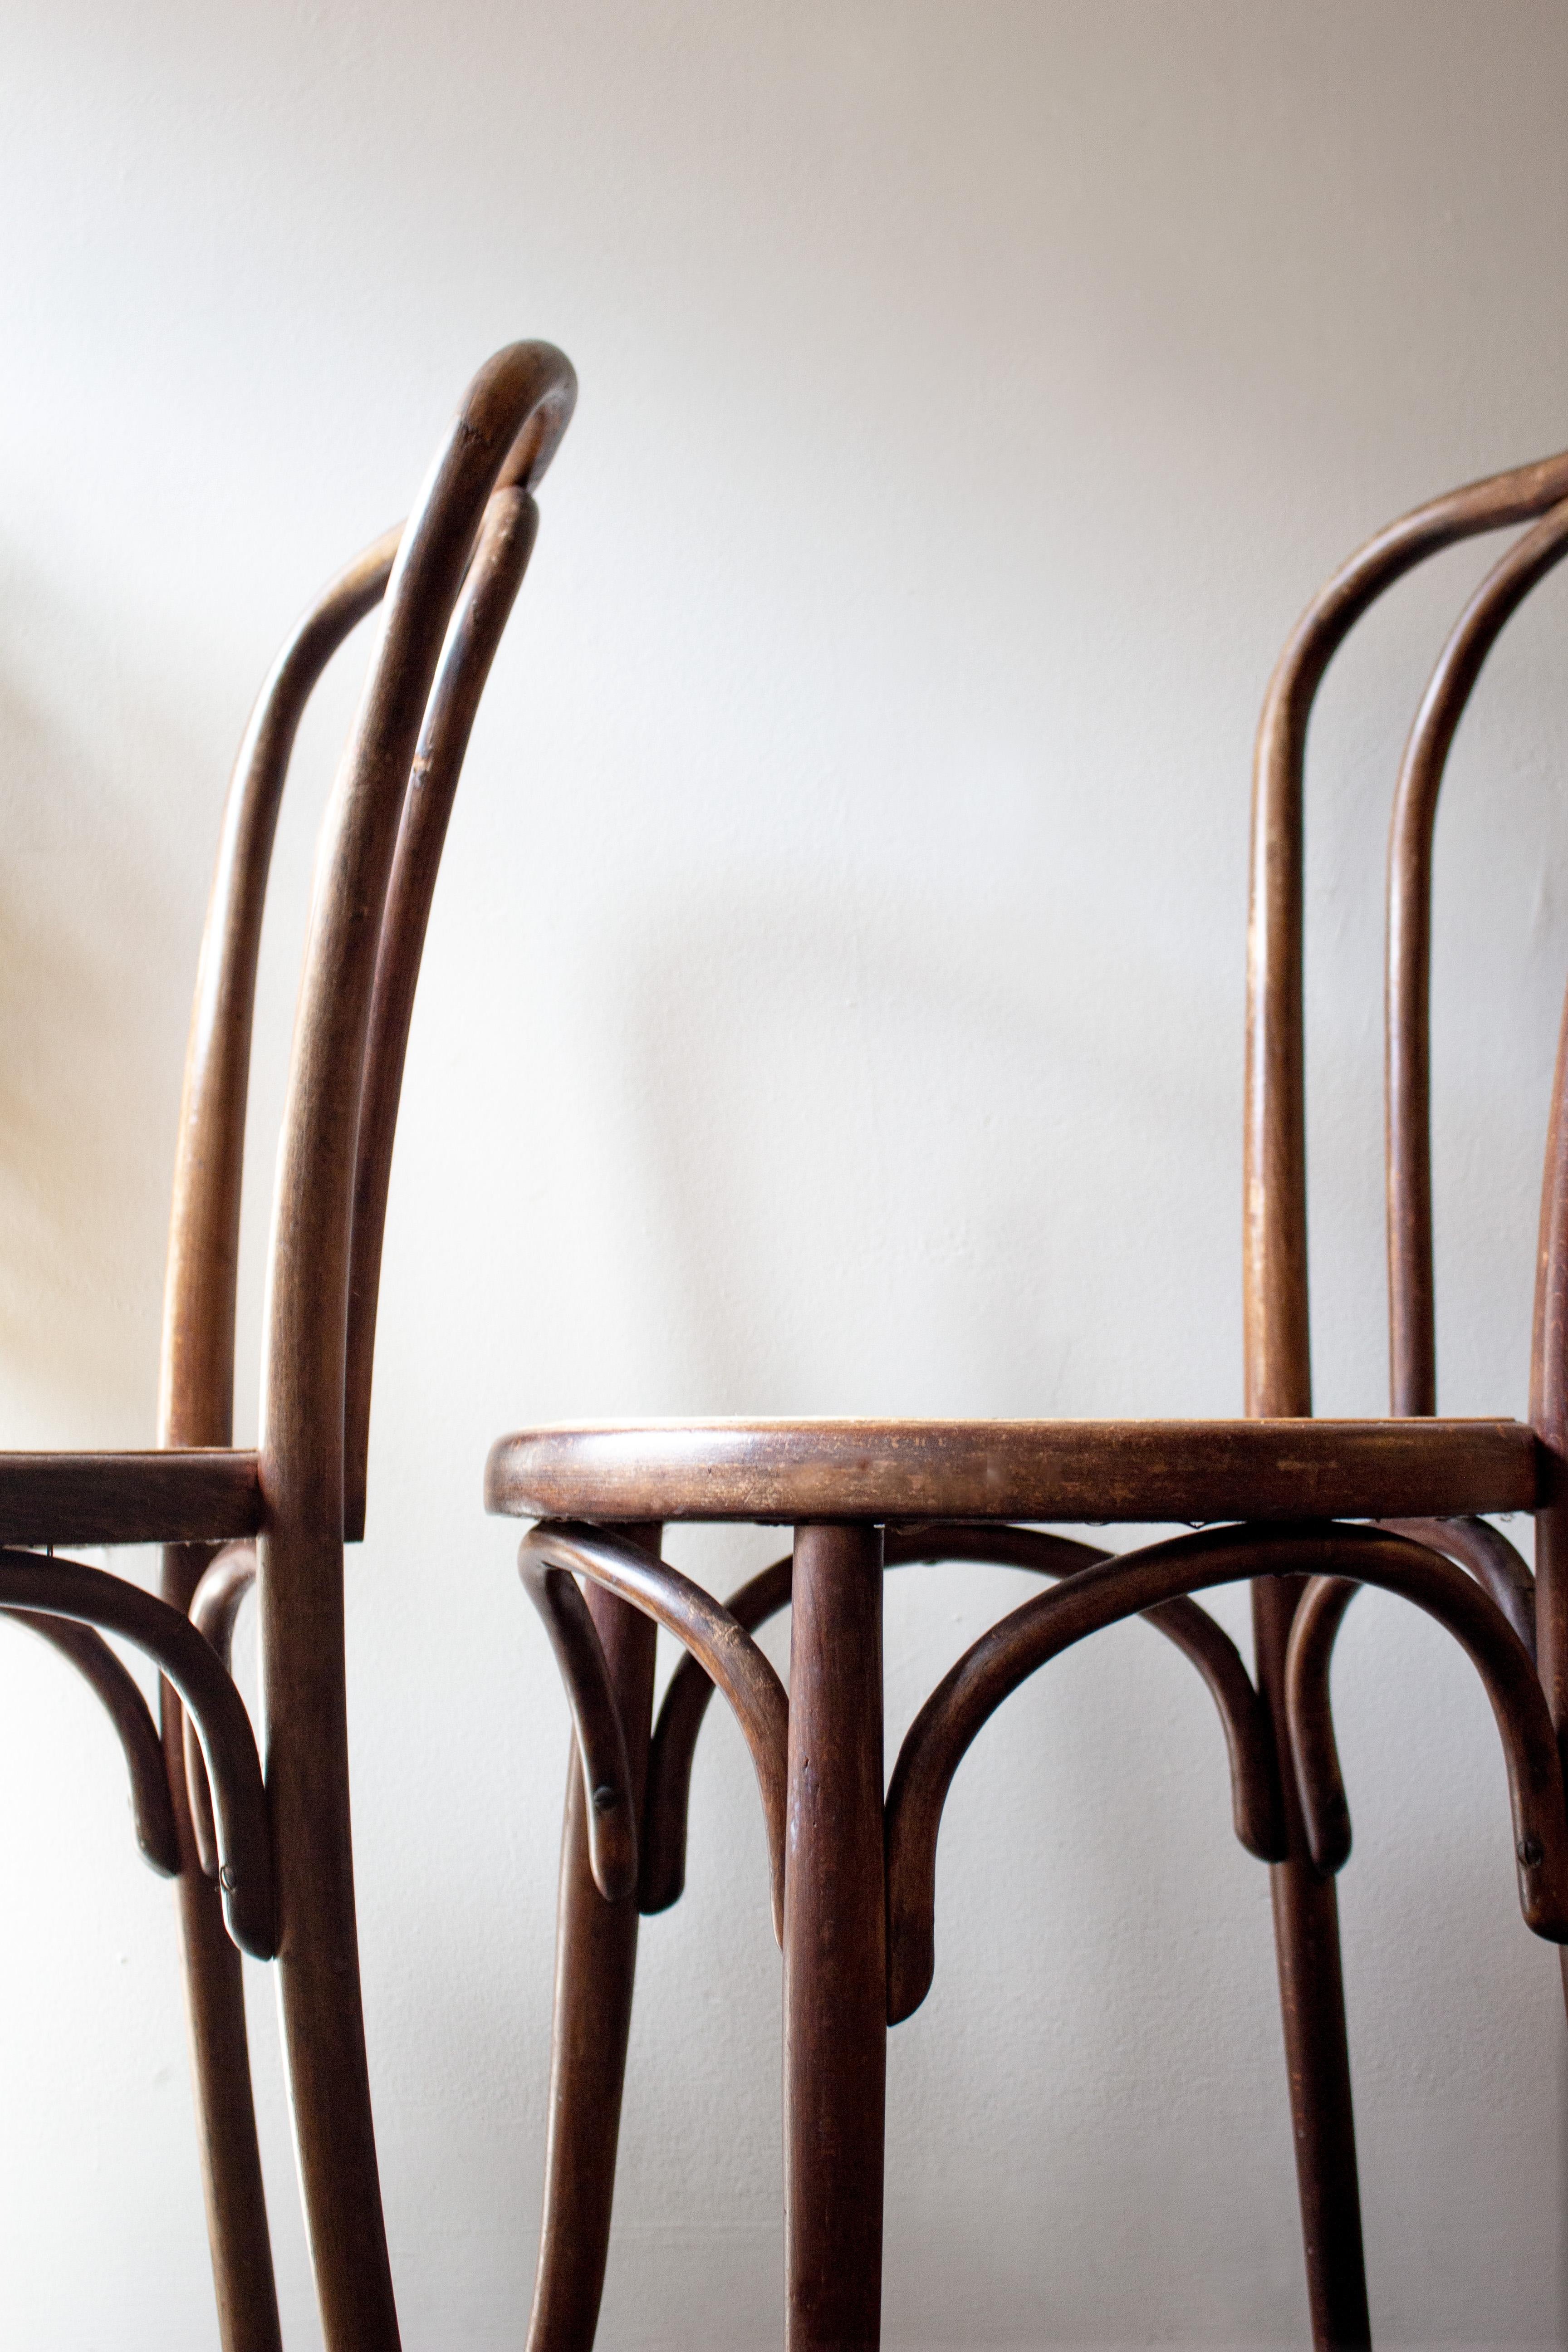 Hand-Woven Thonet Cane Chair Set by Fischel